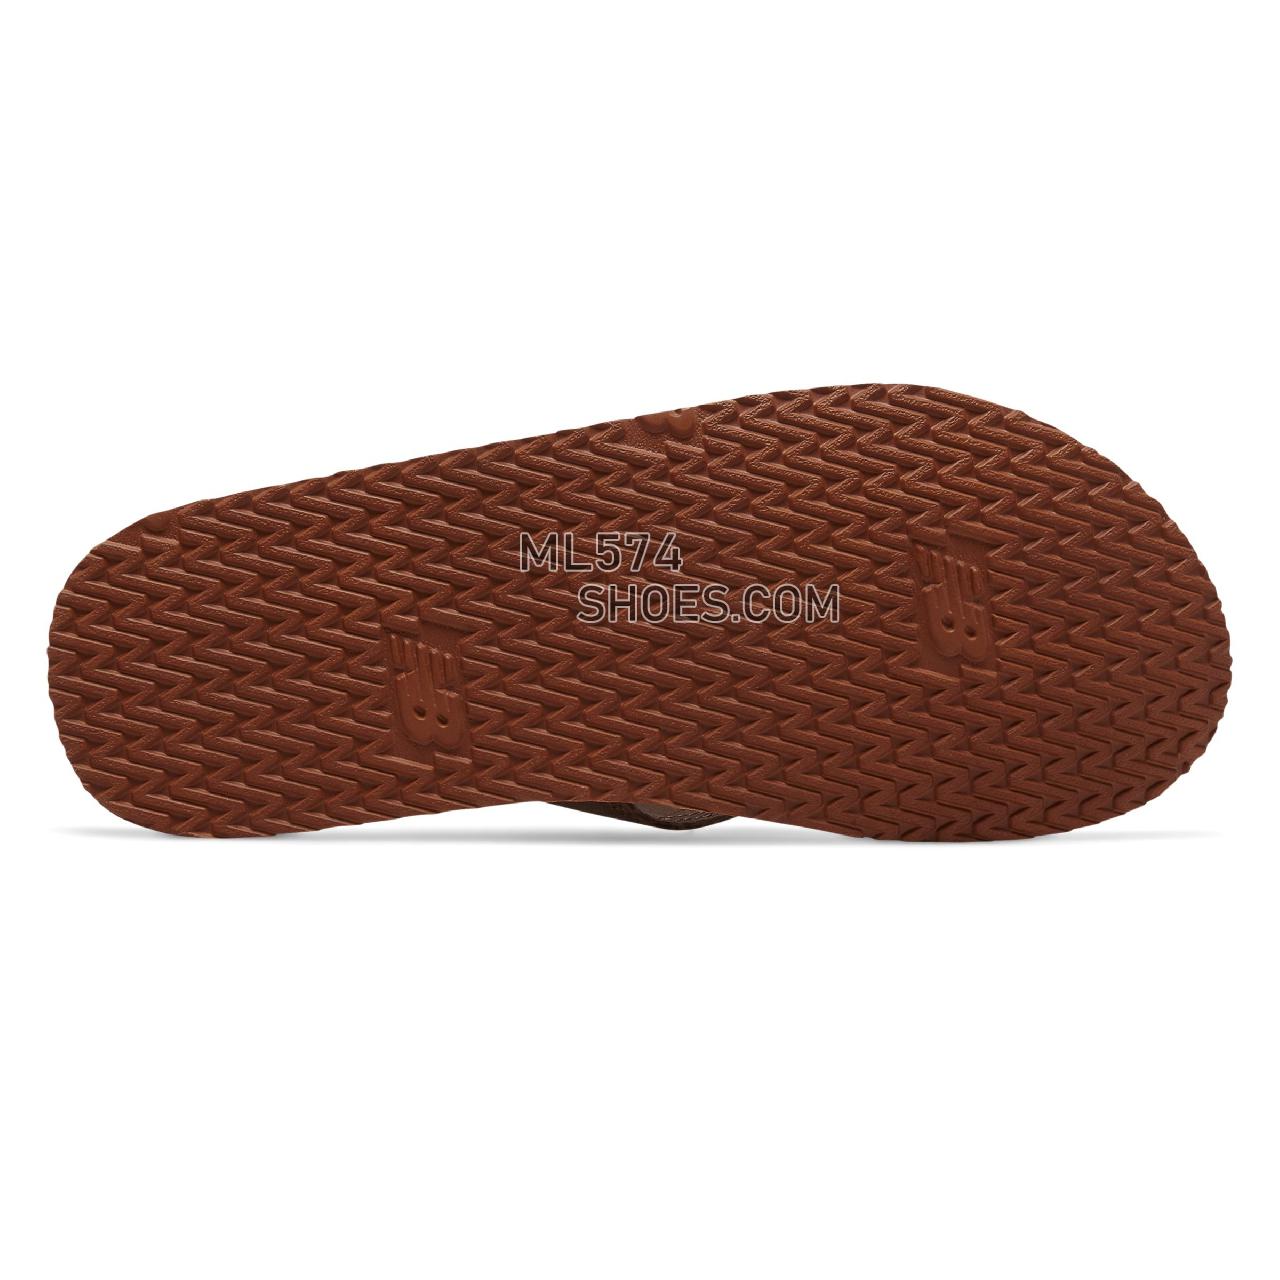 New Balance Classic Thong - Men's 6078 - Sandals Tan with Gum - M6078BRGM